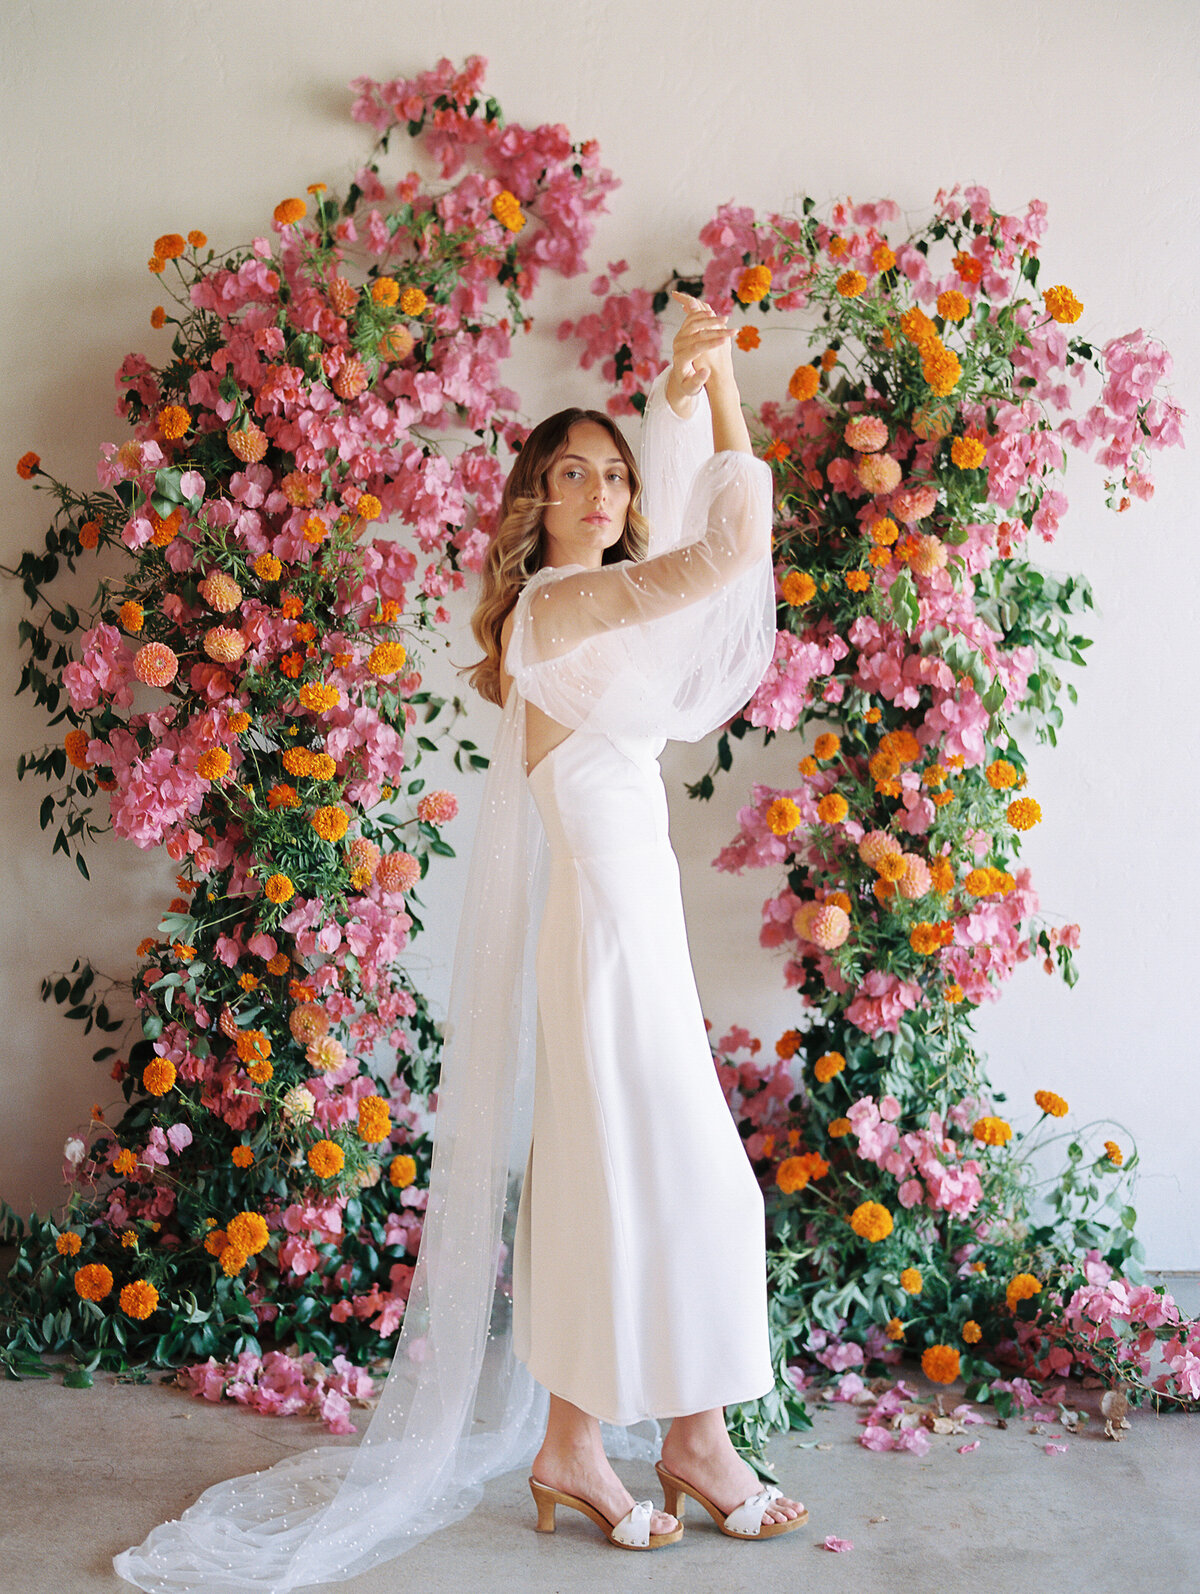 Sarah Rae Floral Designs Wedding Event Florist Flowers Kentucky Chic Whimsical Romantic Weddings42